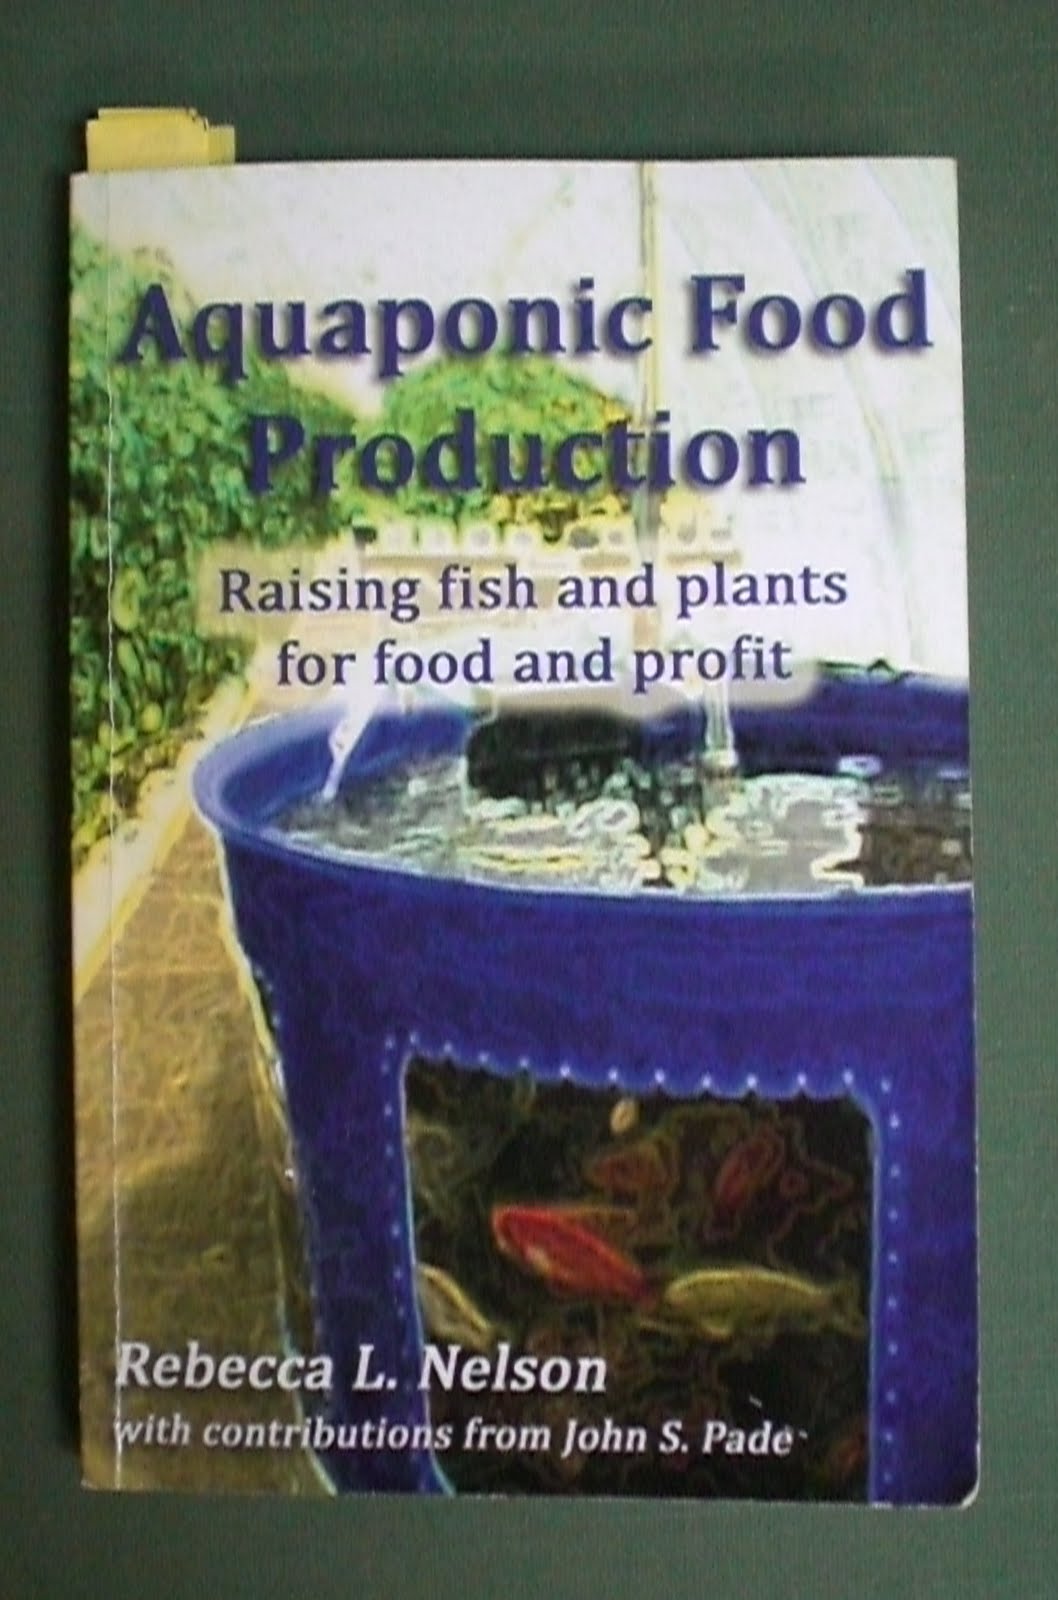 "Aquaponic Food Production" Book Review | Trinity Aquaponics